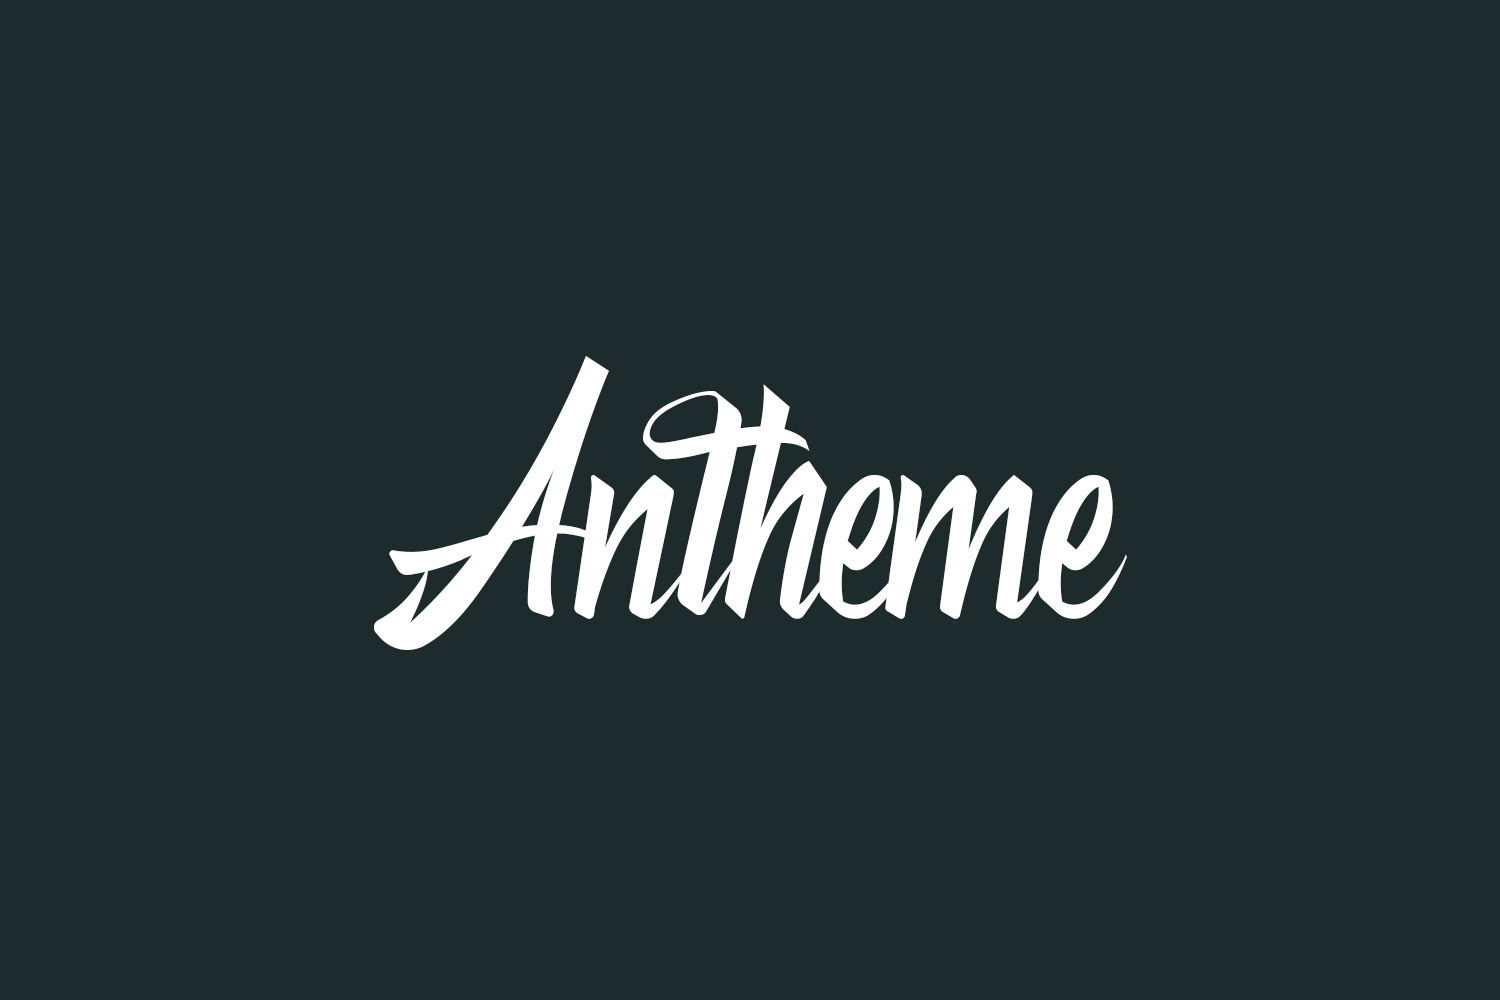 Antheme Free Font